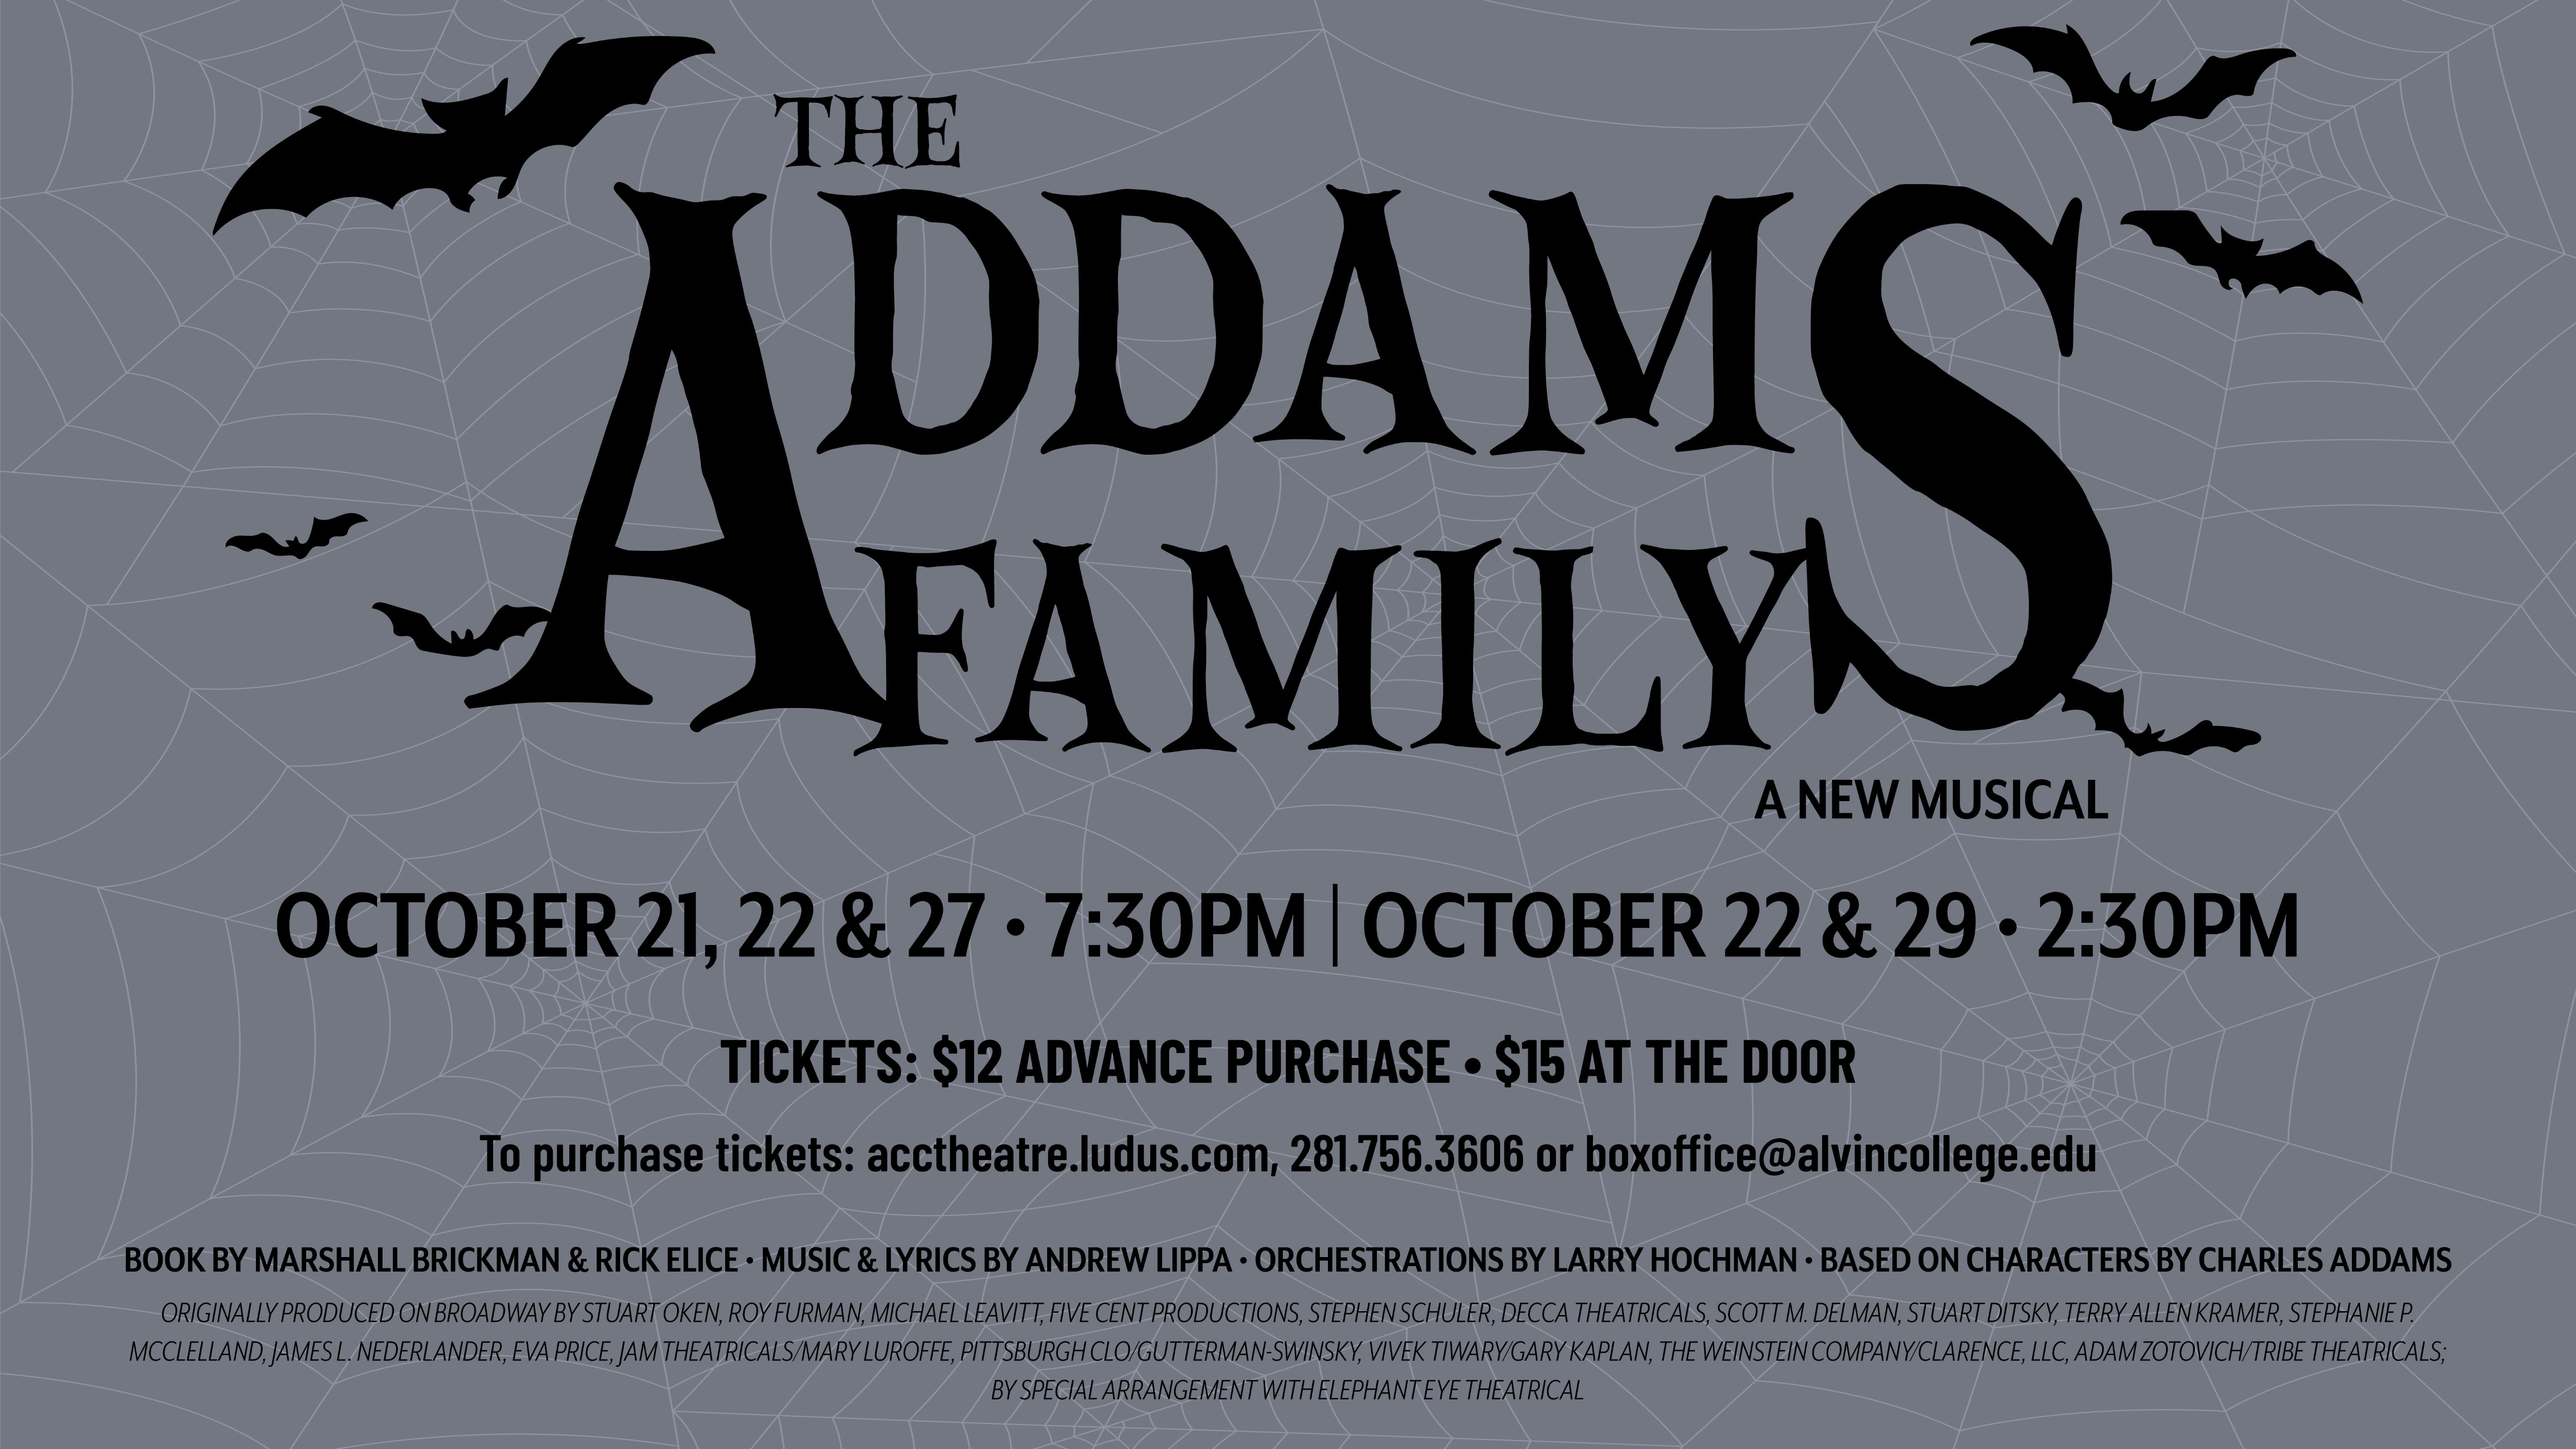 The Addams Family by Marshall Brickman, Rick Elise, Andrew Lippa, Larry Hochman